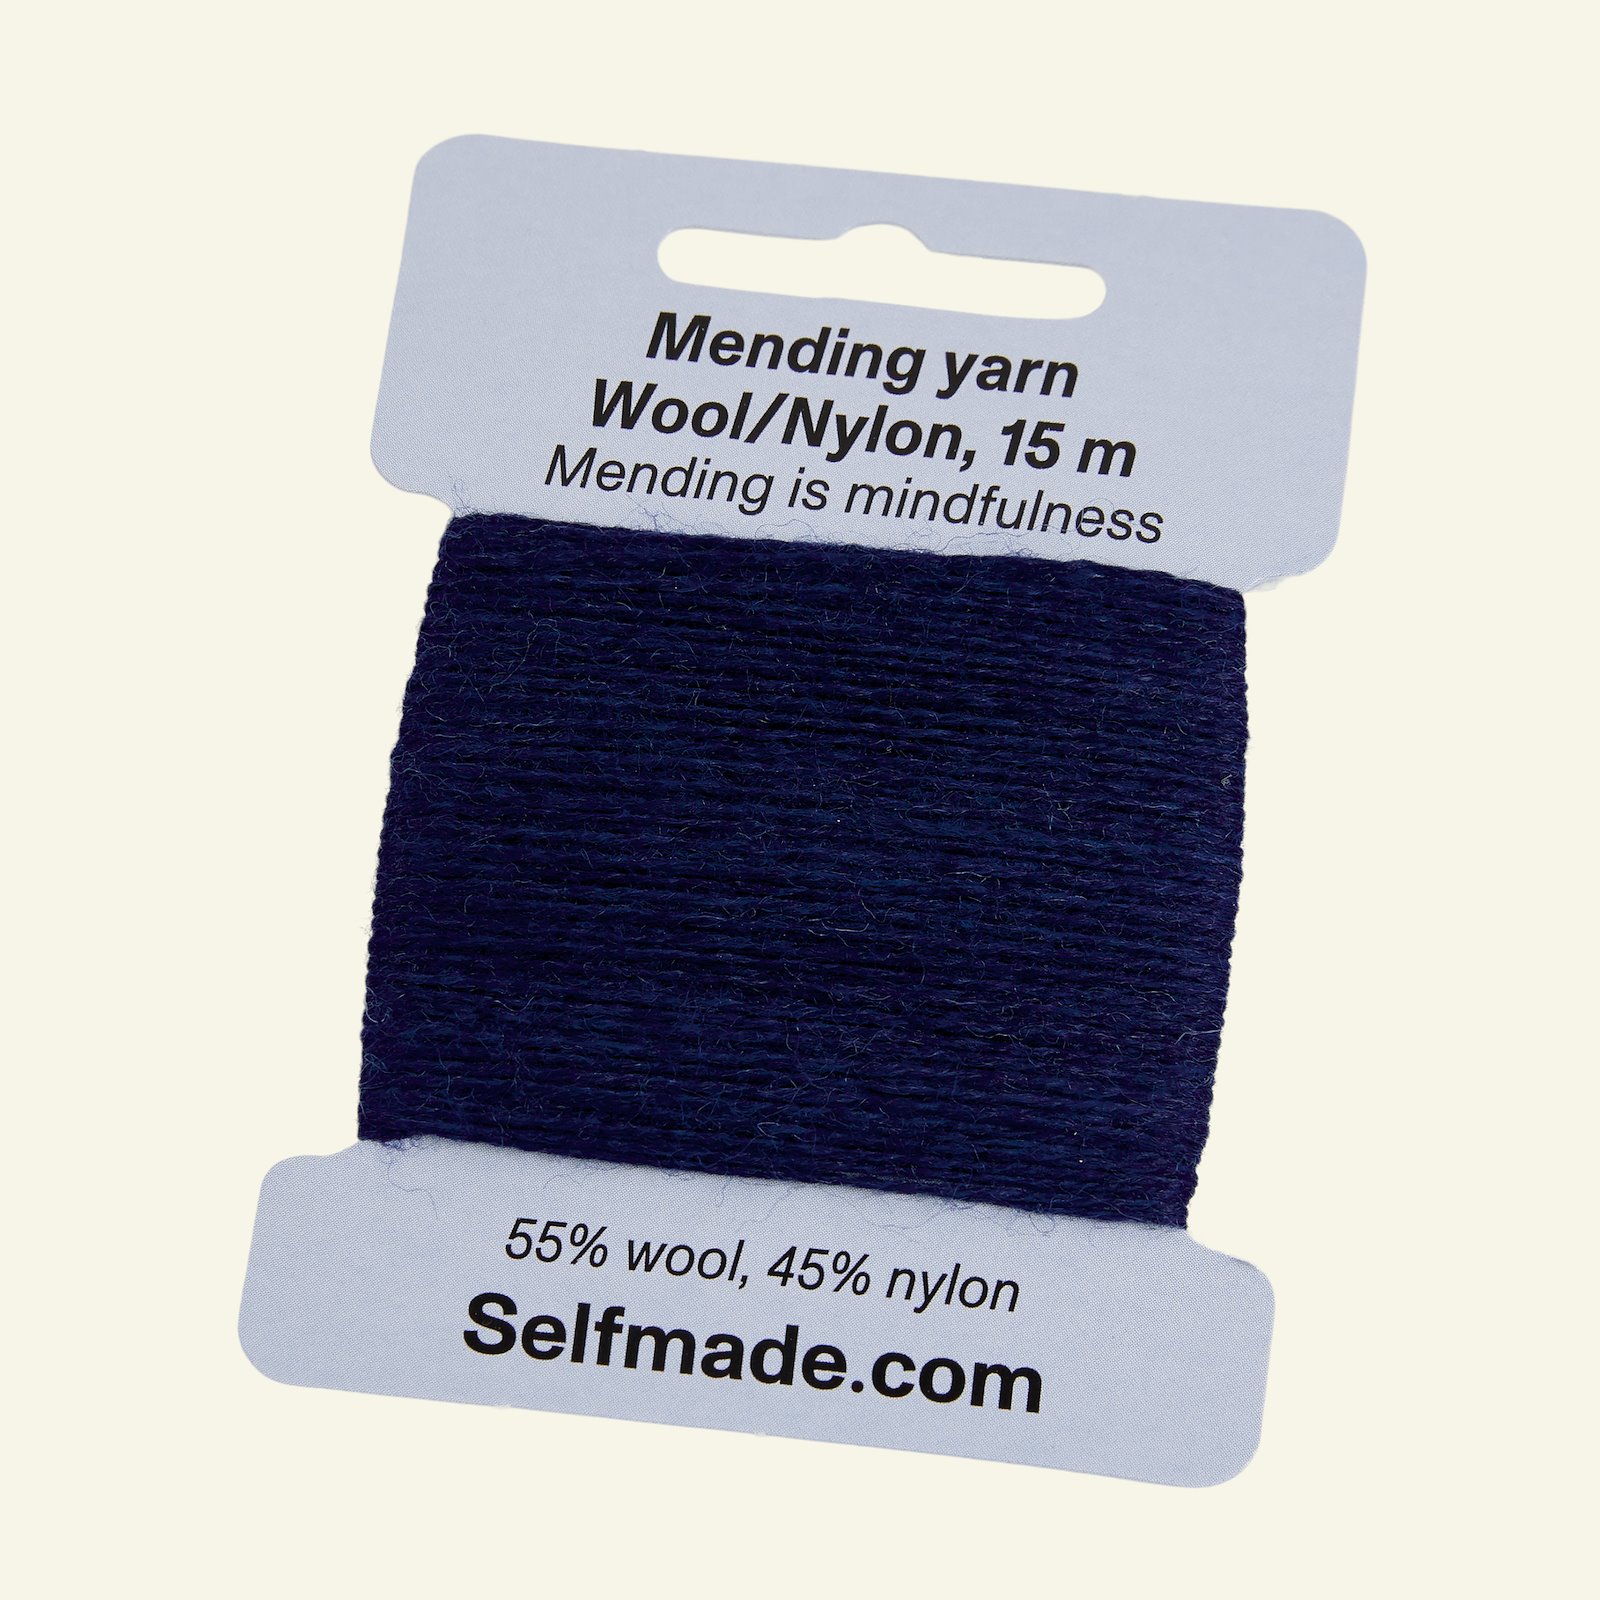 Mending yarn wool mix navy blue 15m 35512_pack